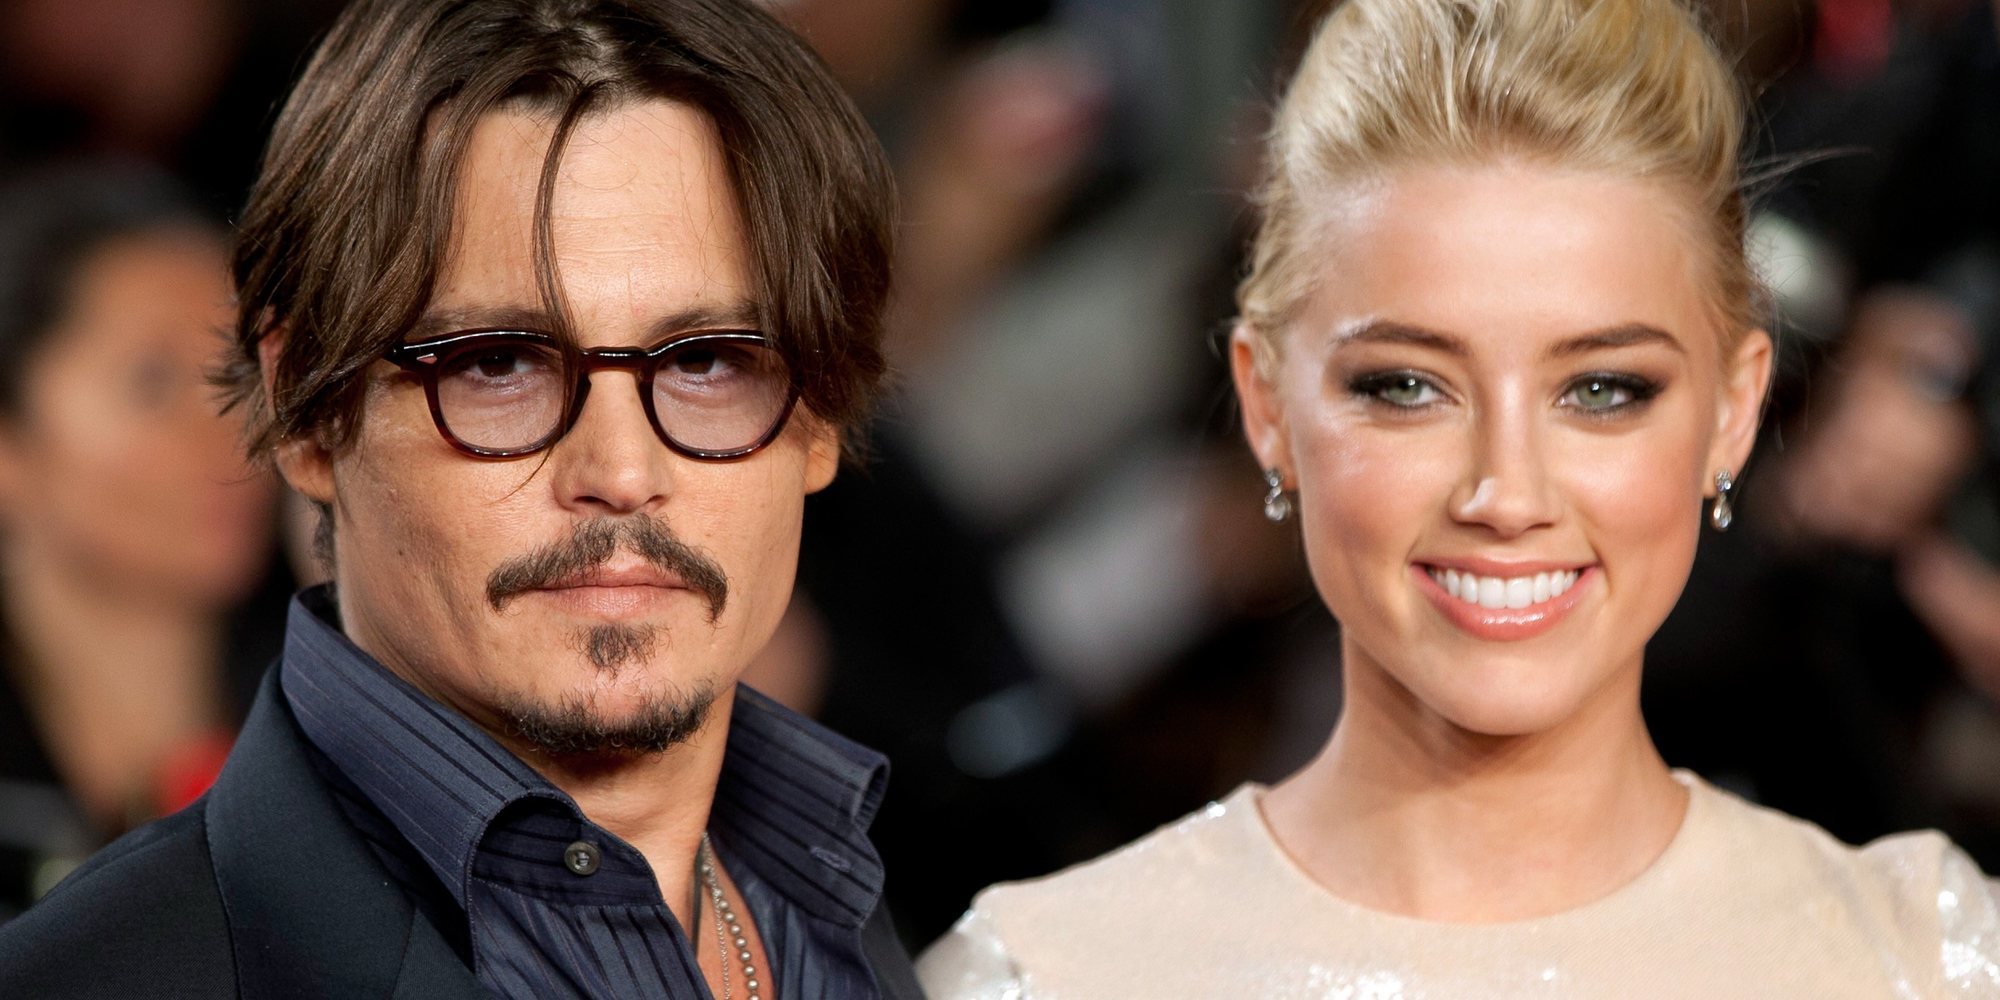 Johnny Depp dice que Amber Heard fingió los maltratos domésticos: "Yo fui la víctima"